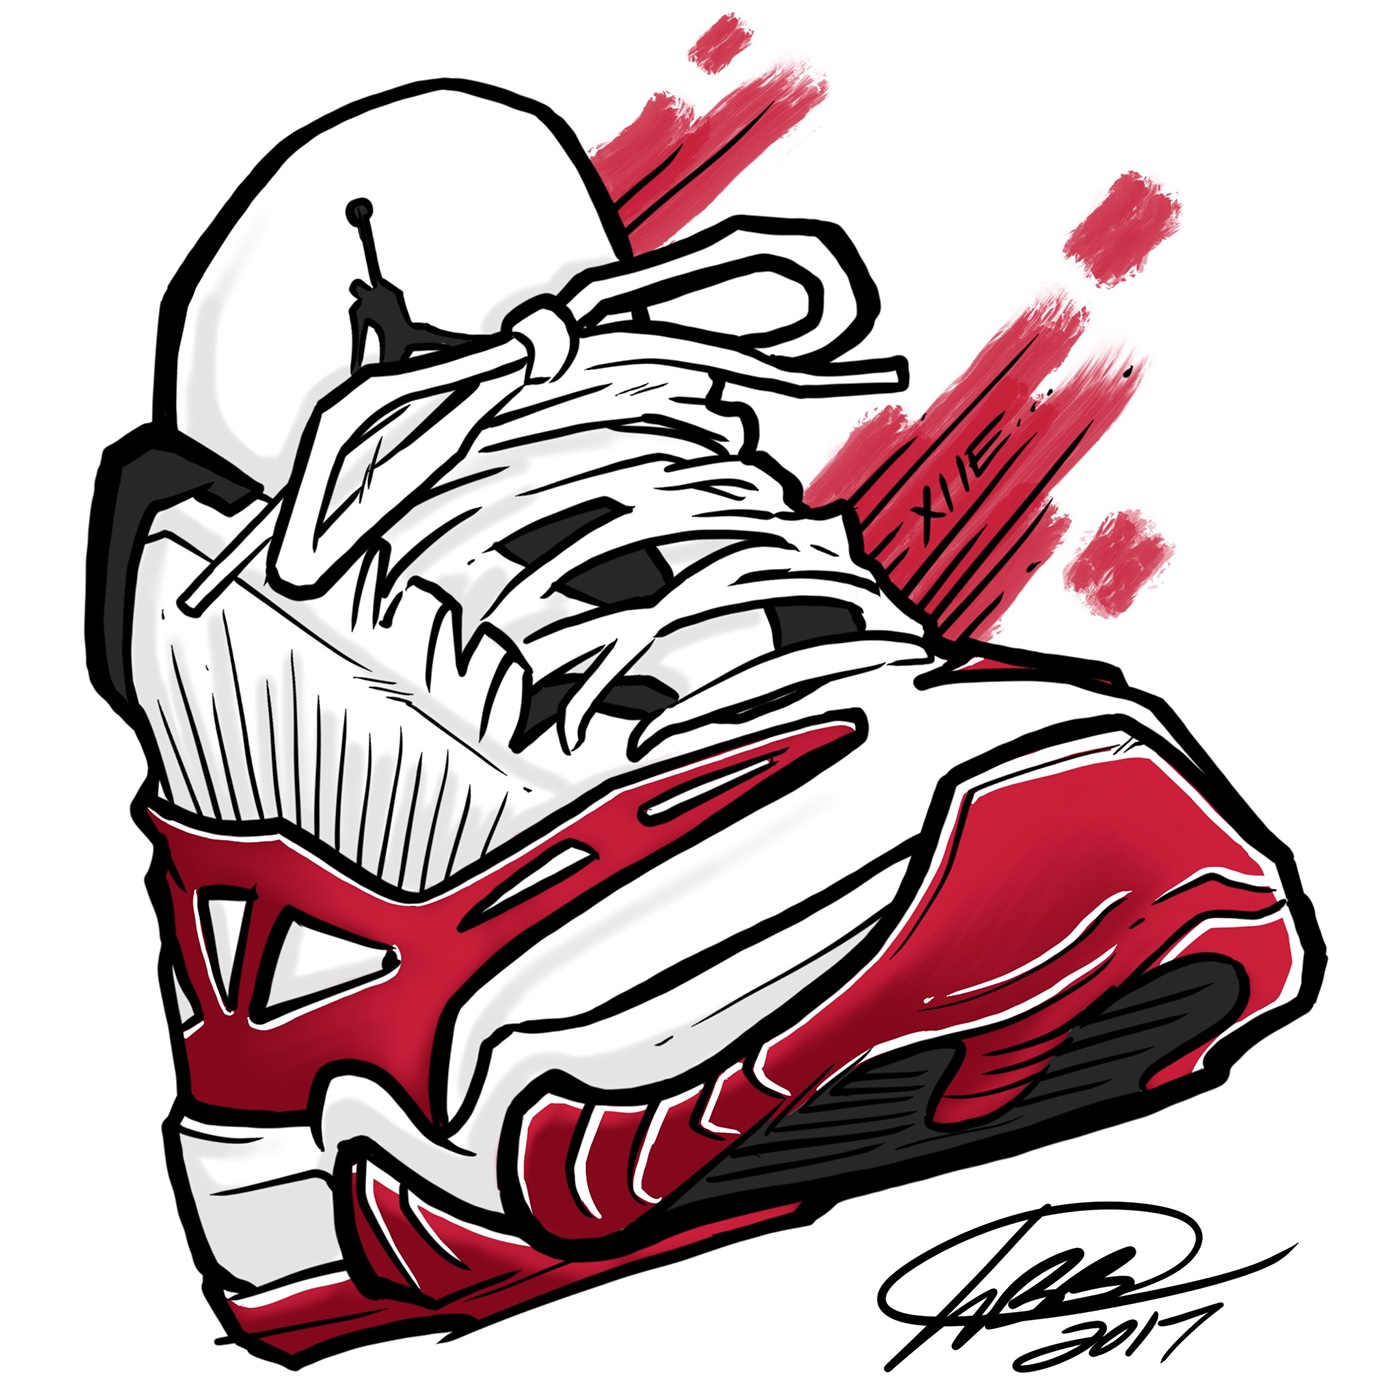 sneakers jordan kicks basketball Michael Jordan jordan brand CEO sneaker art vector art sneakerheads Nike LeBron vapormax airmax